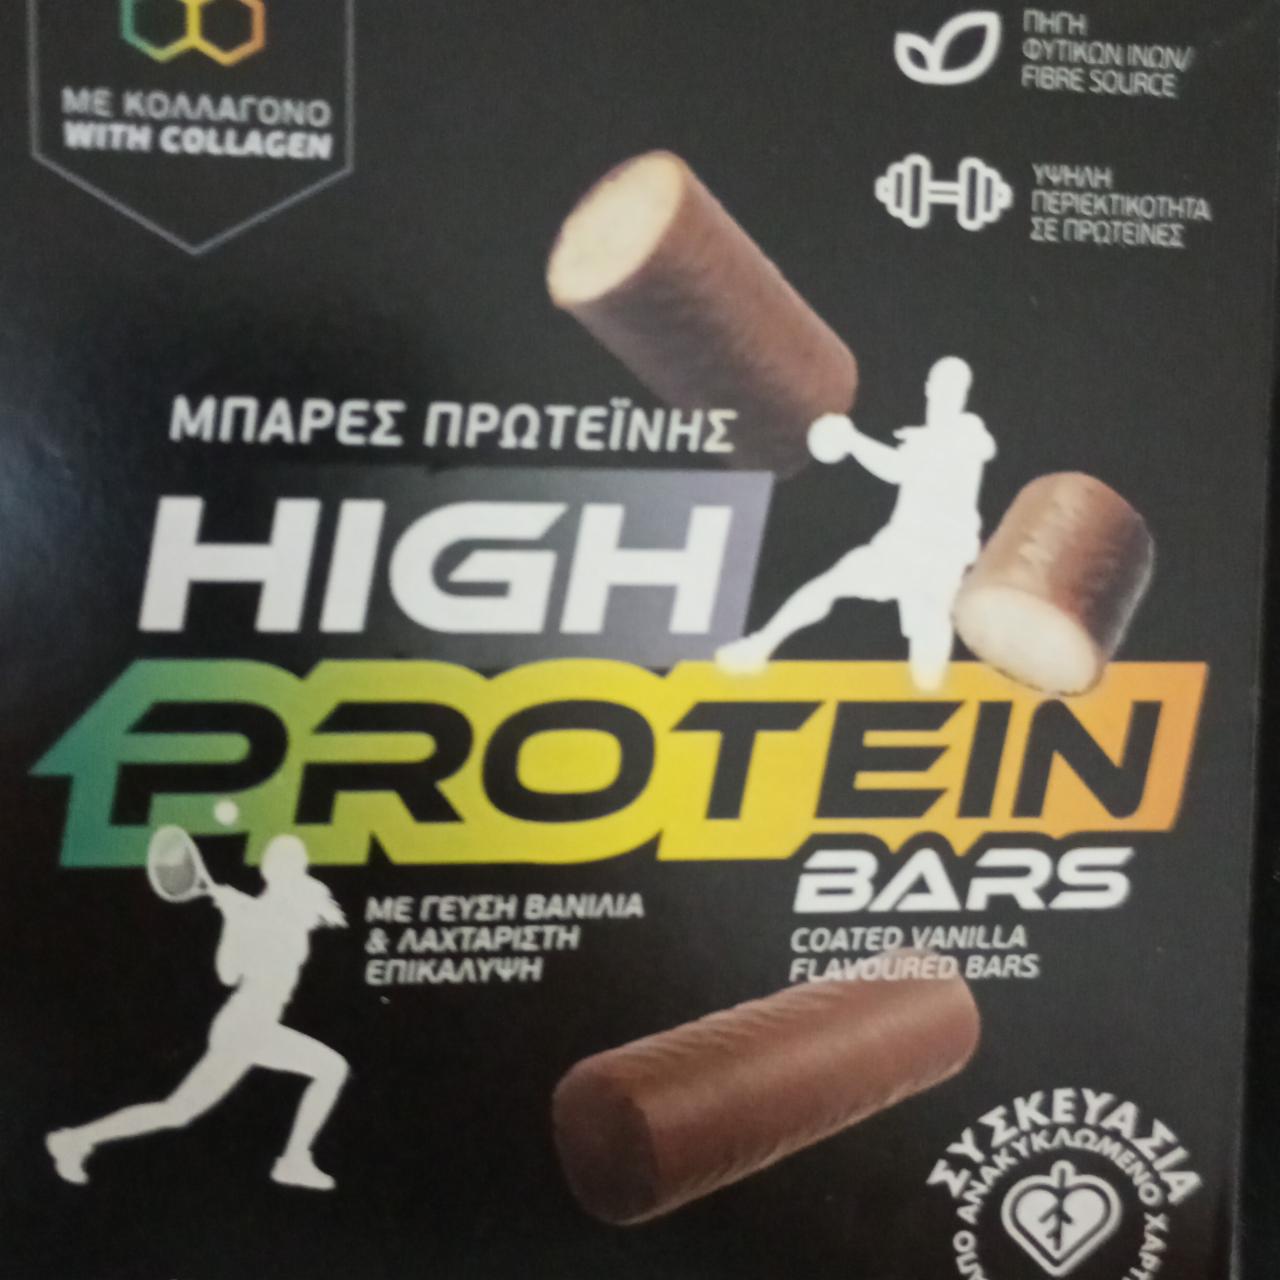 Fotografie - High Protein Bars with Collagen